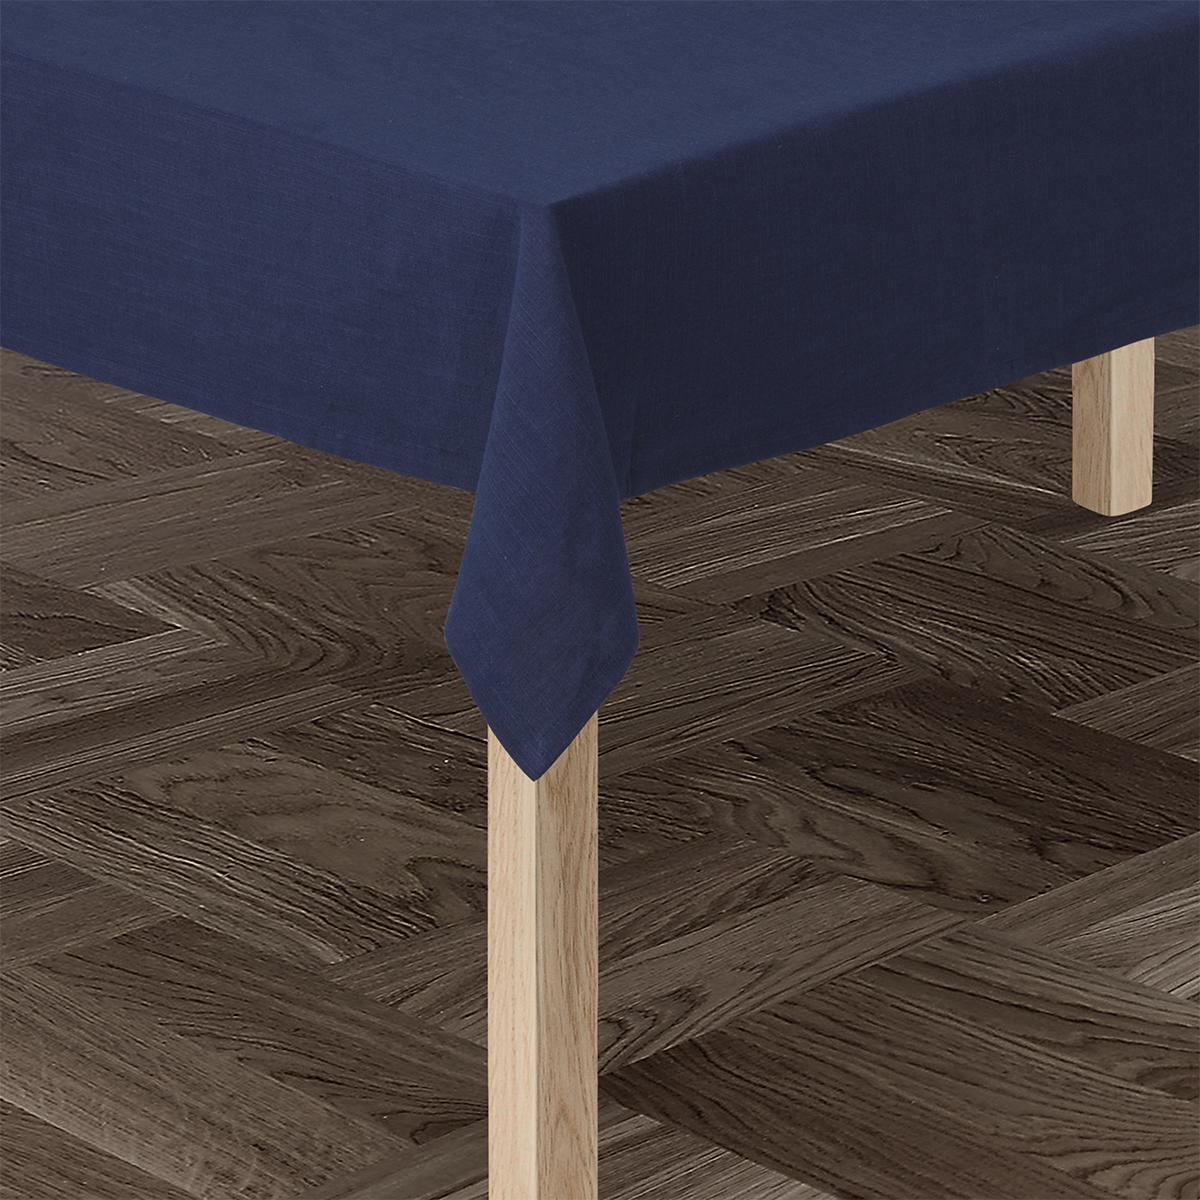 Juna Basic Cotton Tablecloth 150 X370 Cm, Dark Blue